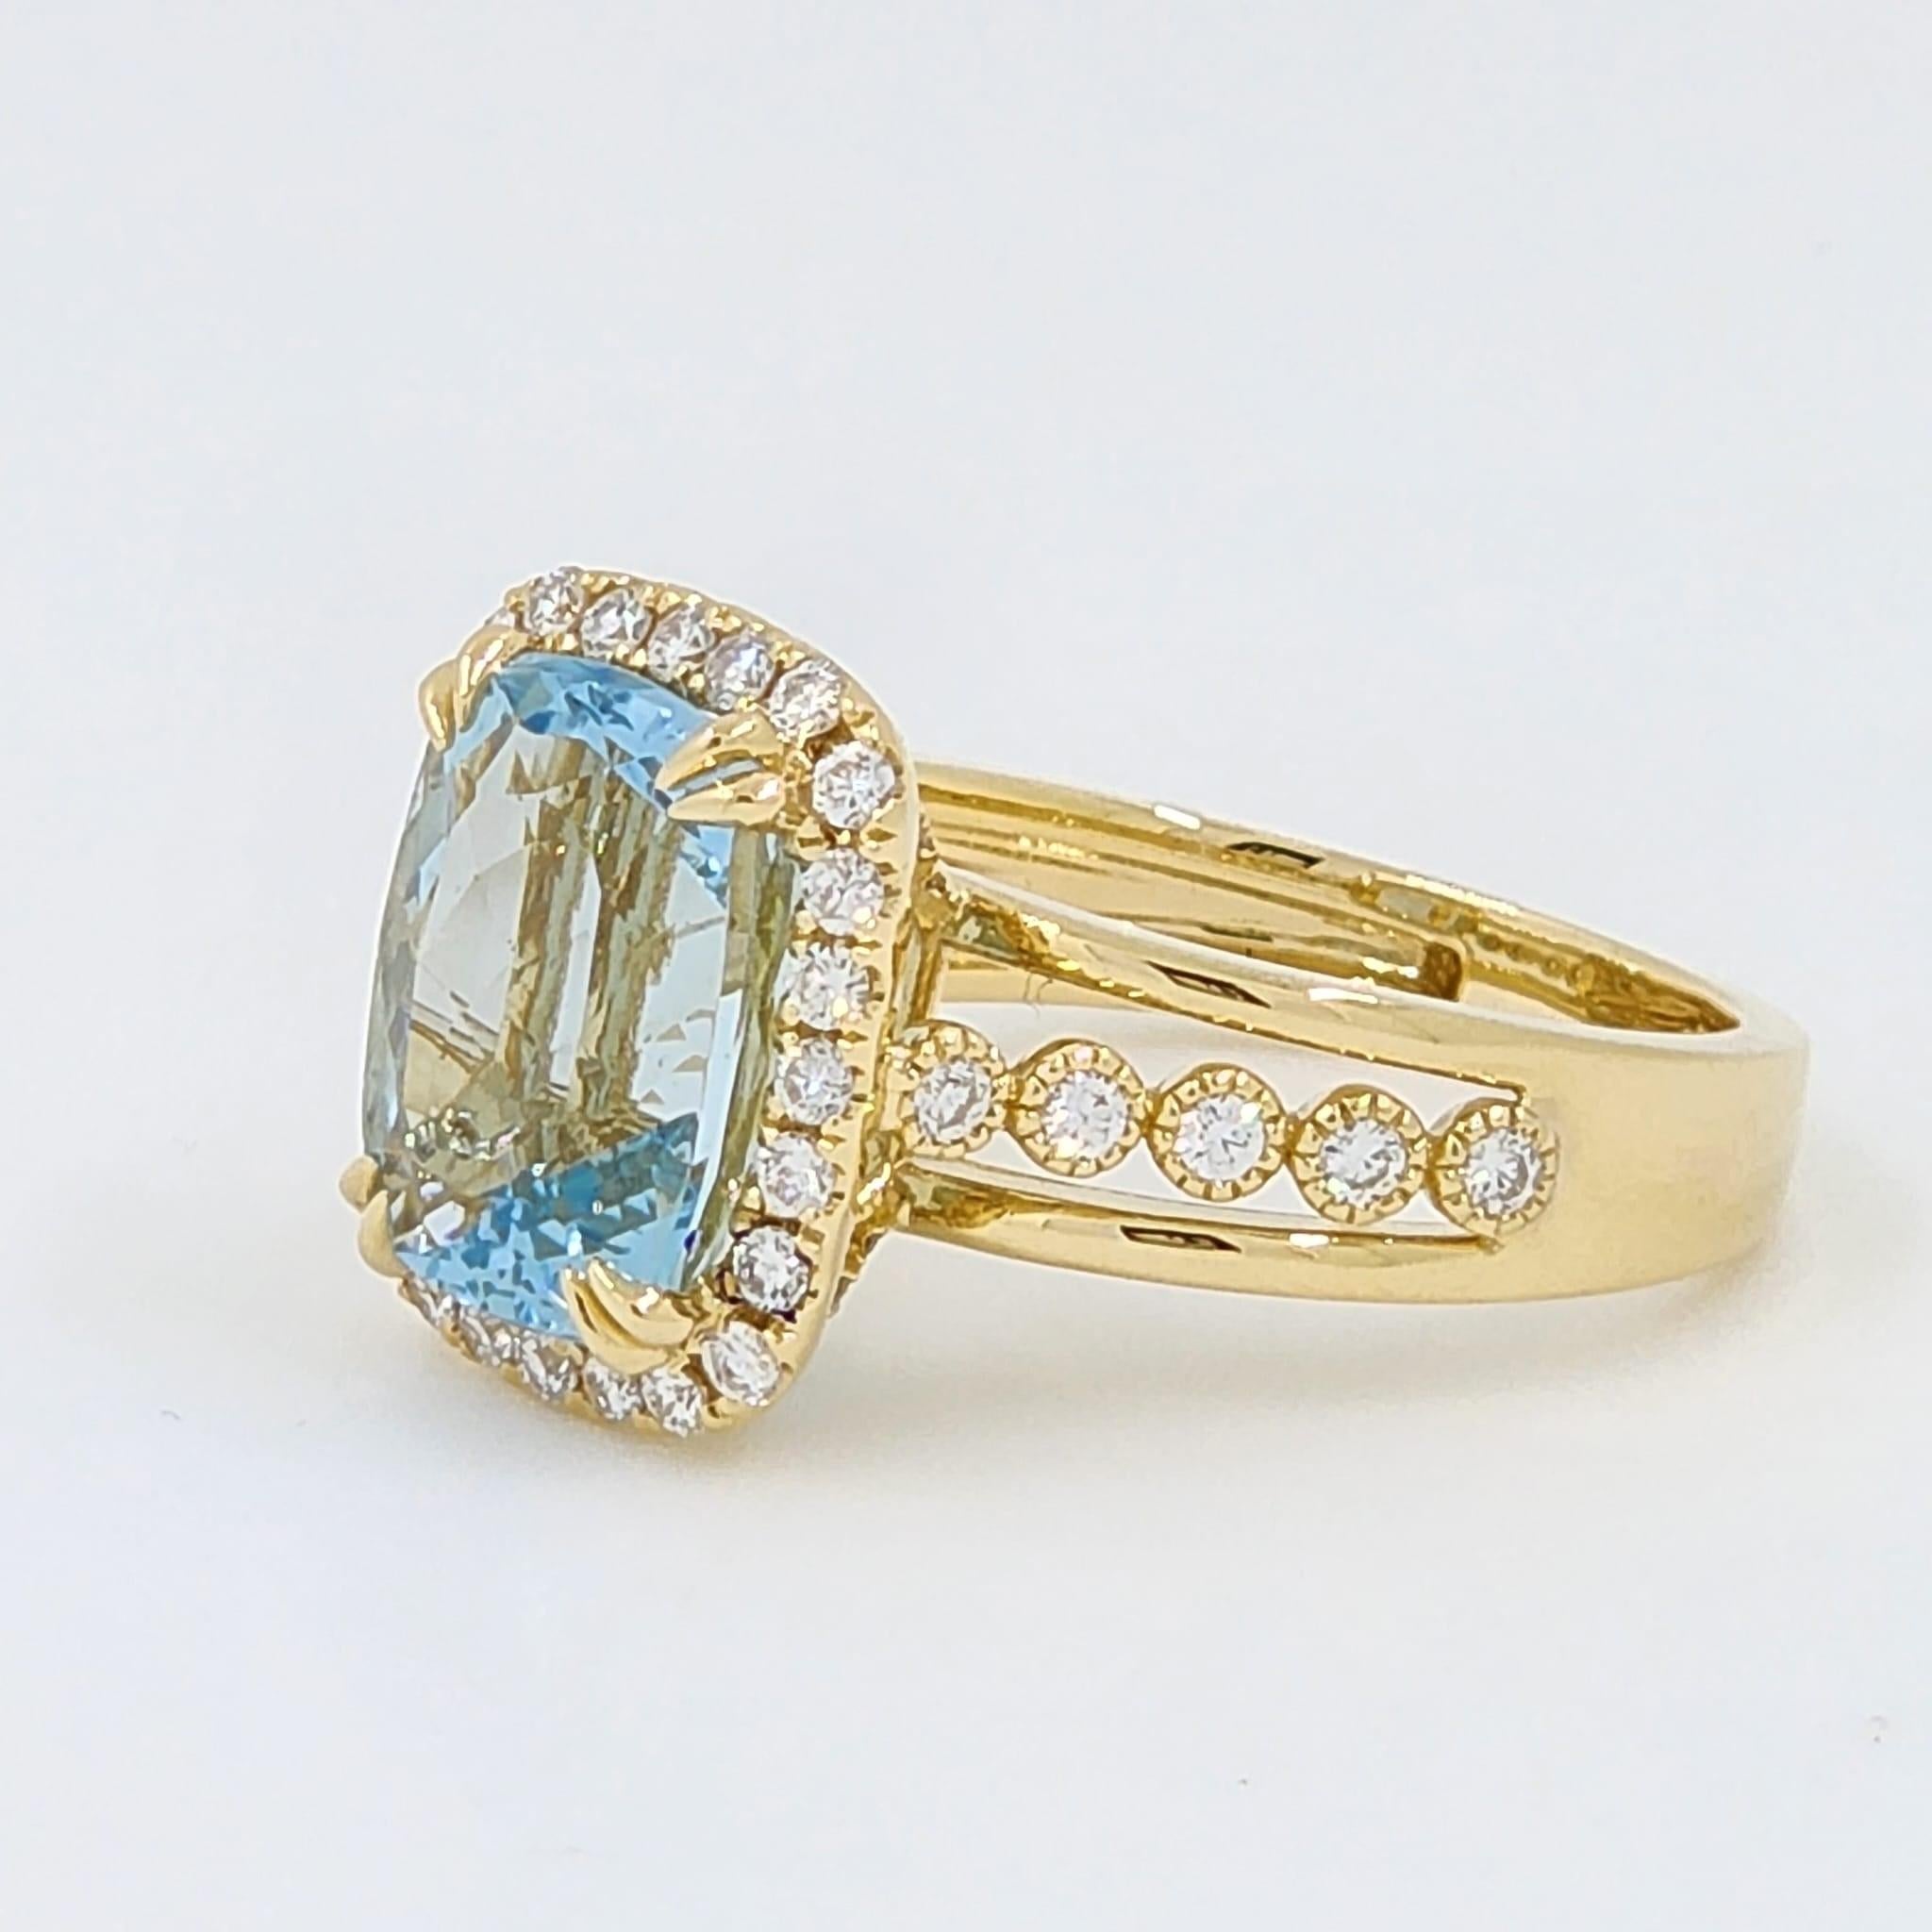 Baguette Cut 3.87 Carat Aquamarine Diamond Ring in 18 Karat Yellow Gold